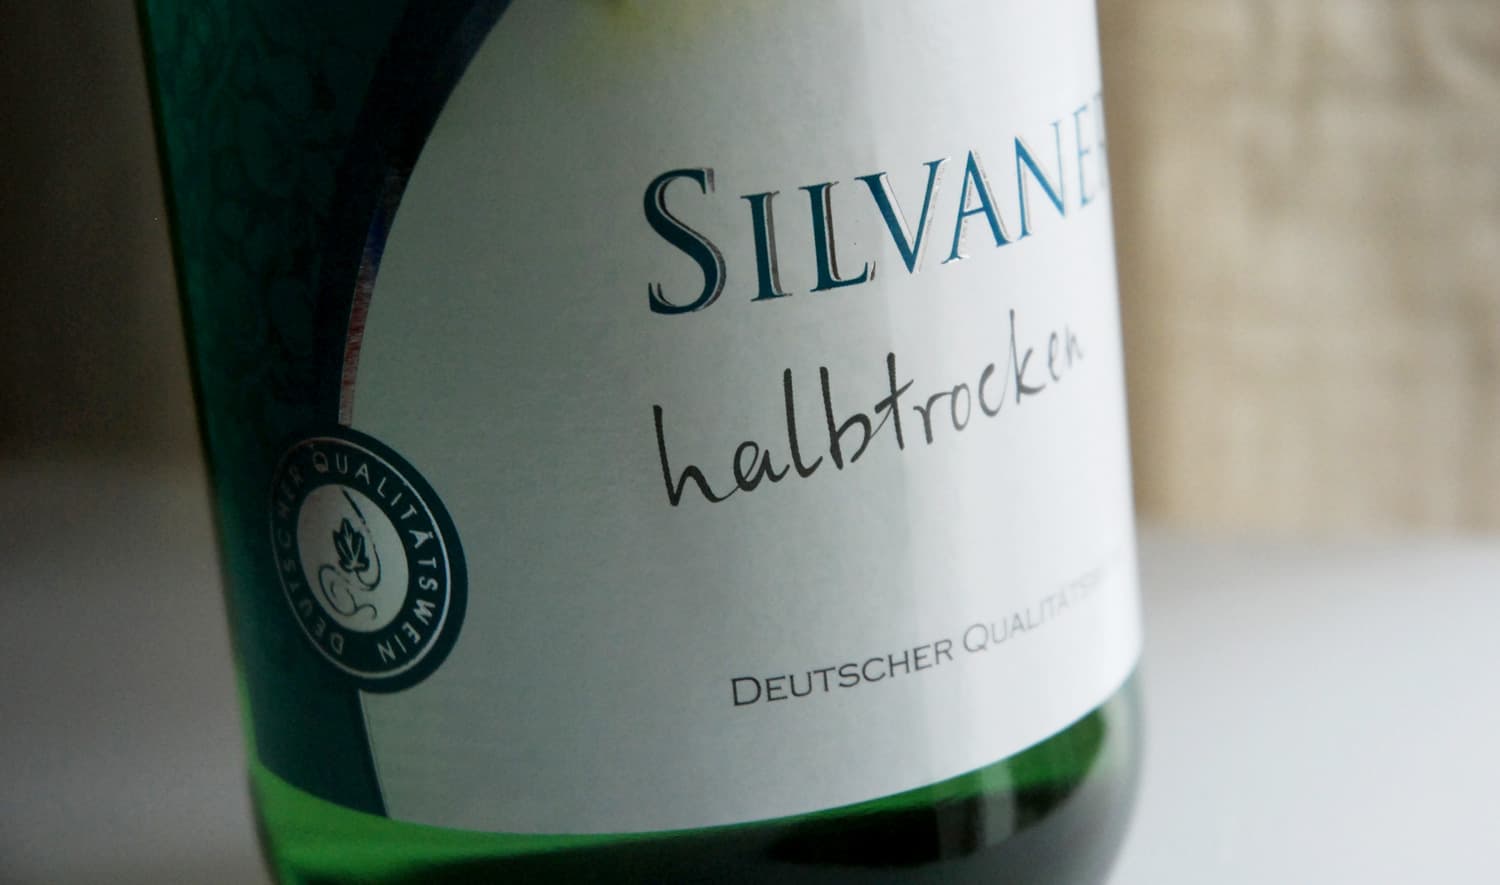 SyysScript font on German quality wine